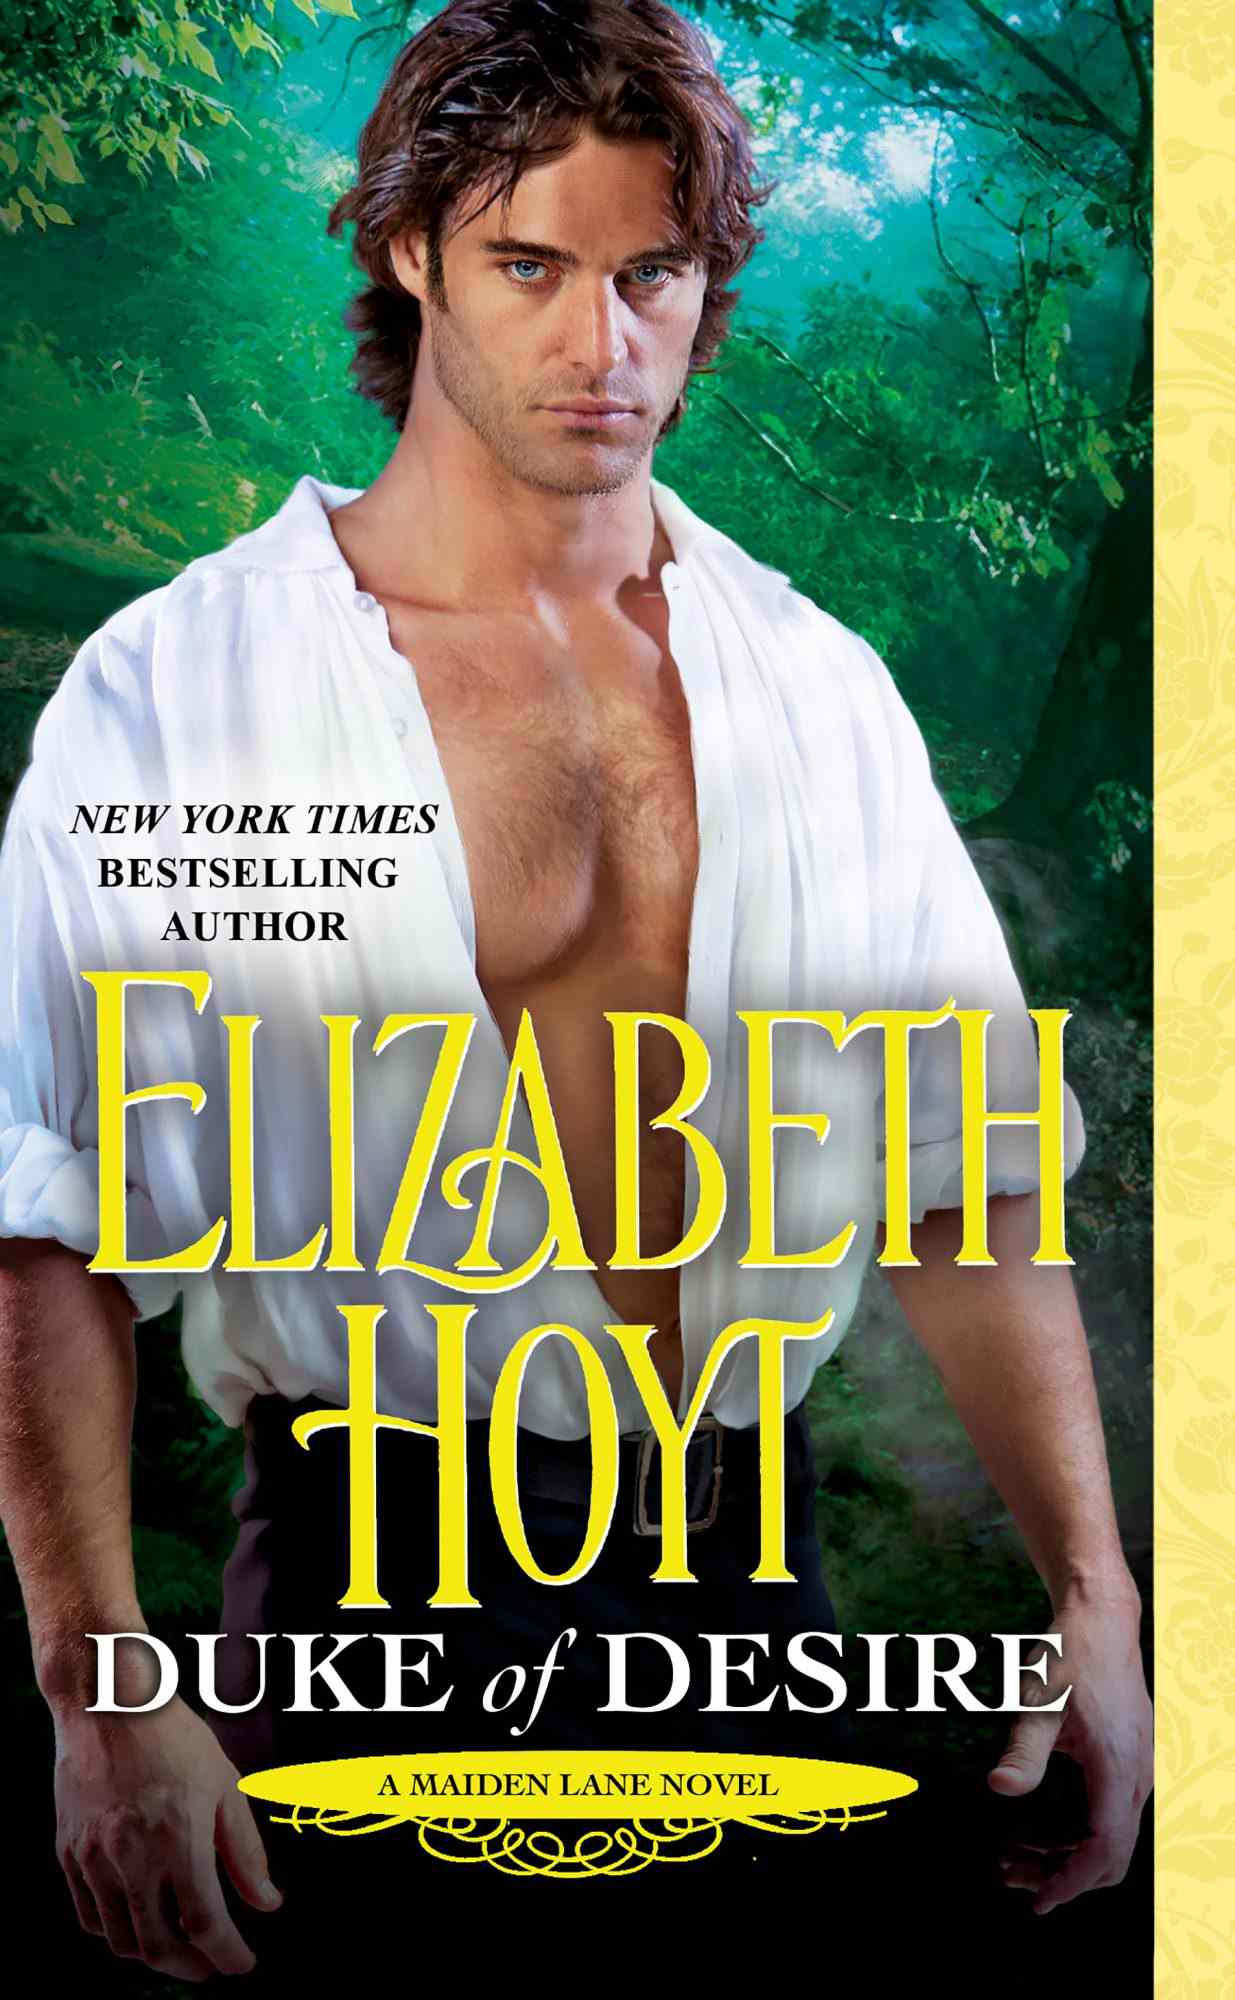 Duke of DesireBook by Elizabeth Hoyt CR: Grand Central Publishing